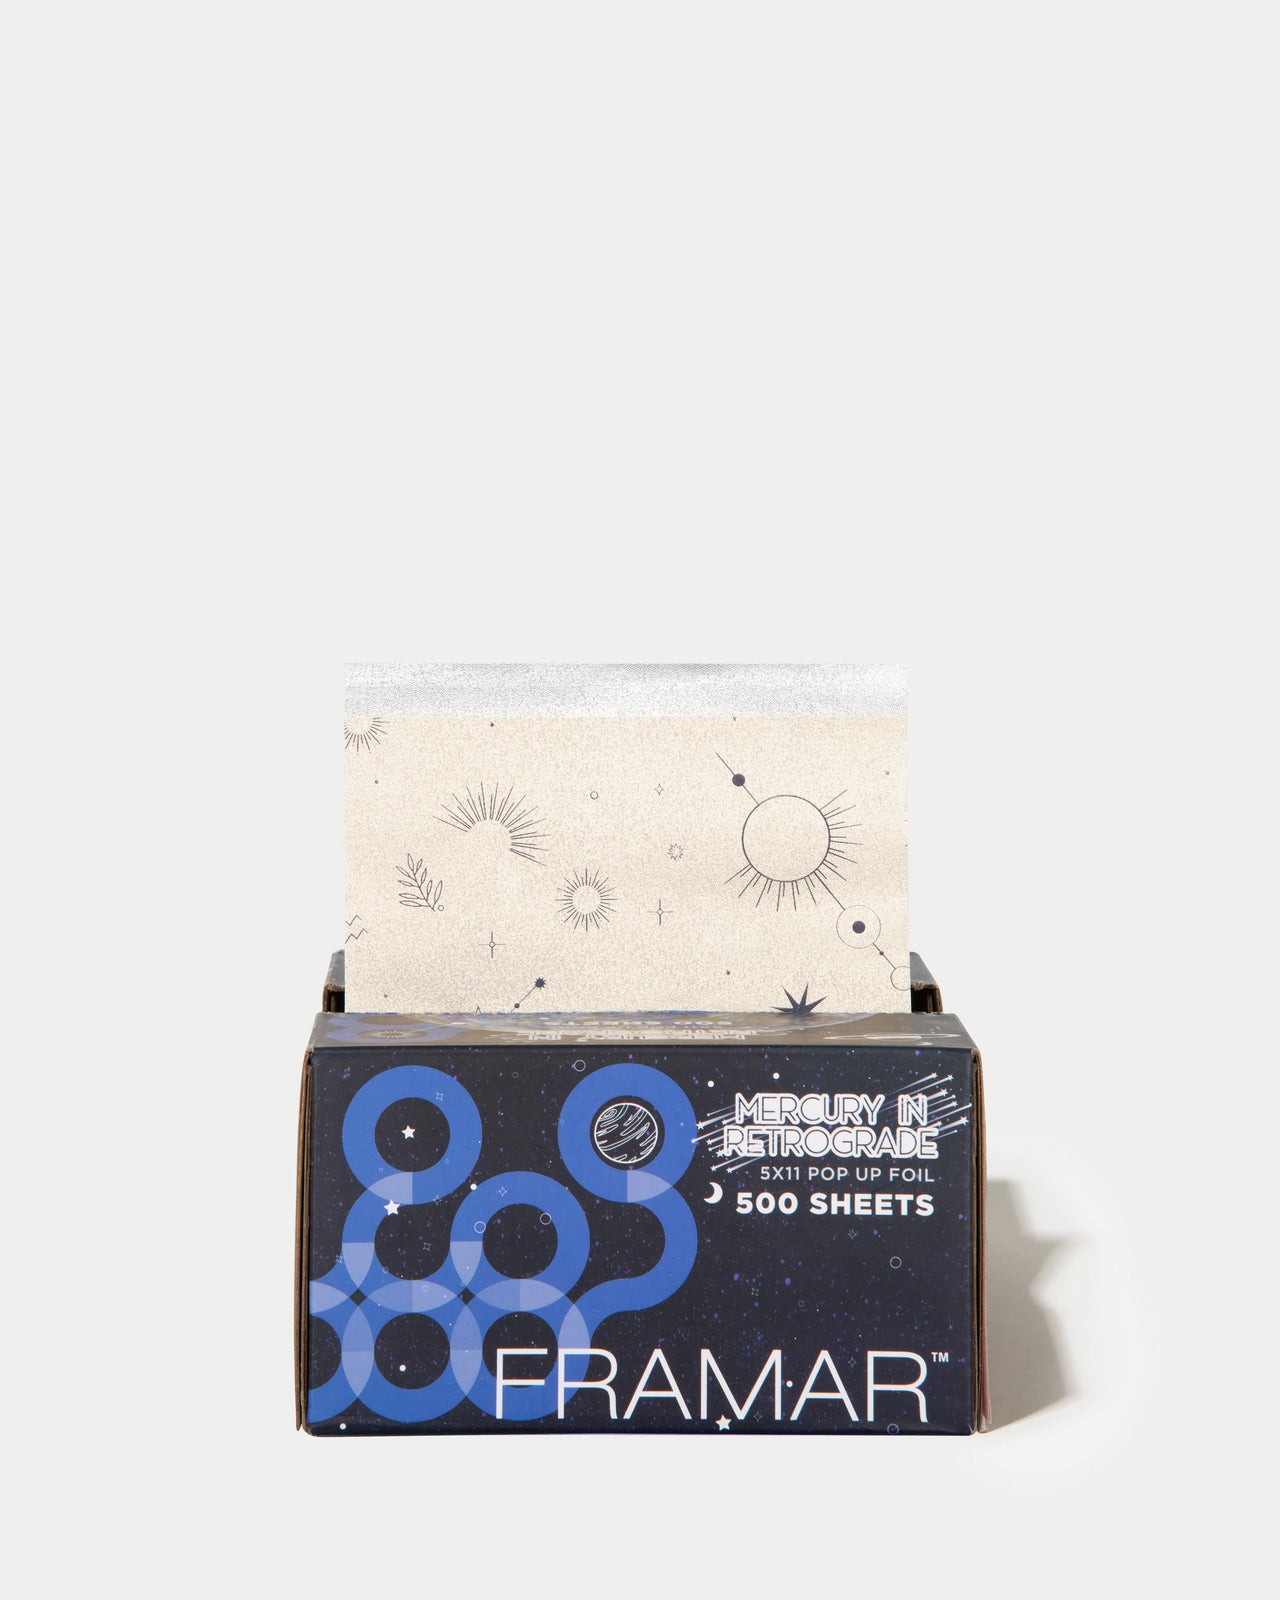  Framar Blue Pop Up Hair Foil, Aluminum Foil Sheets